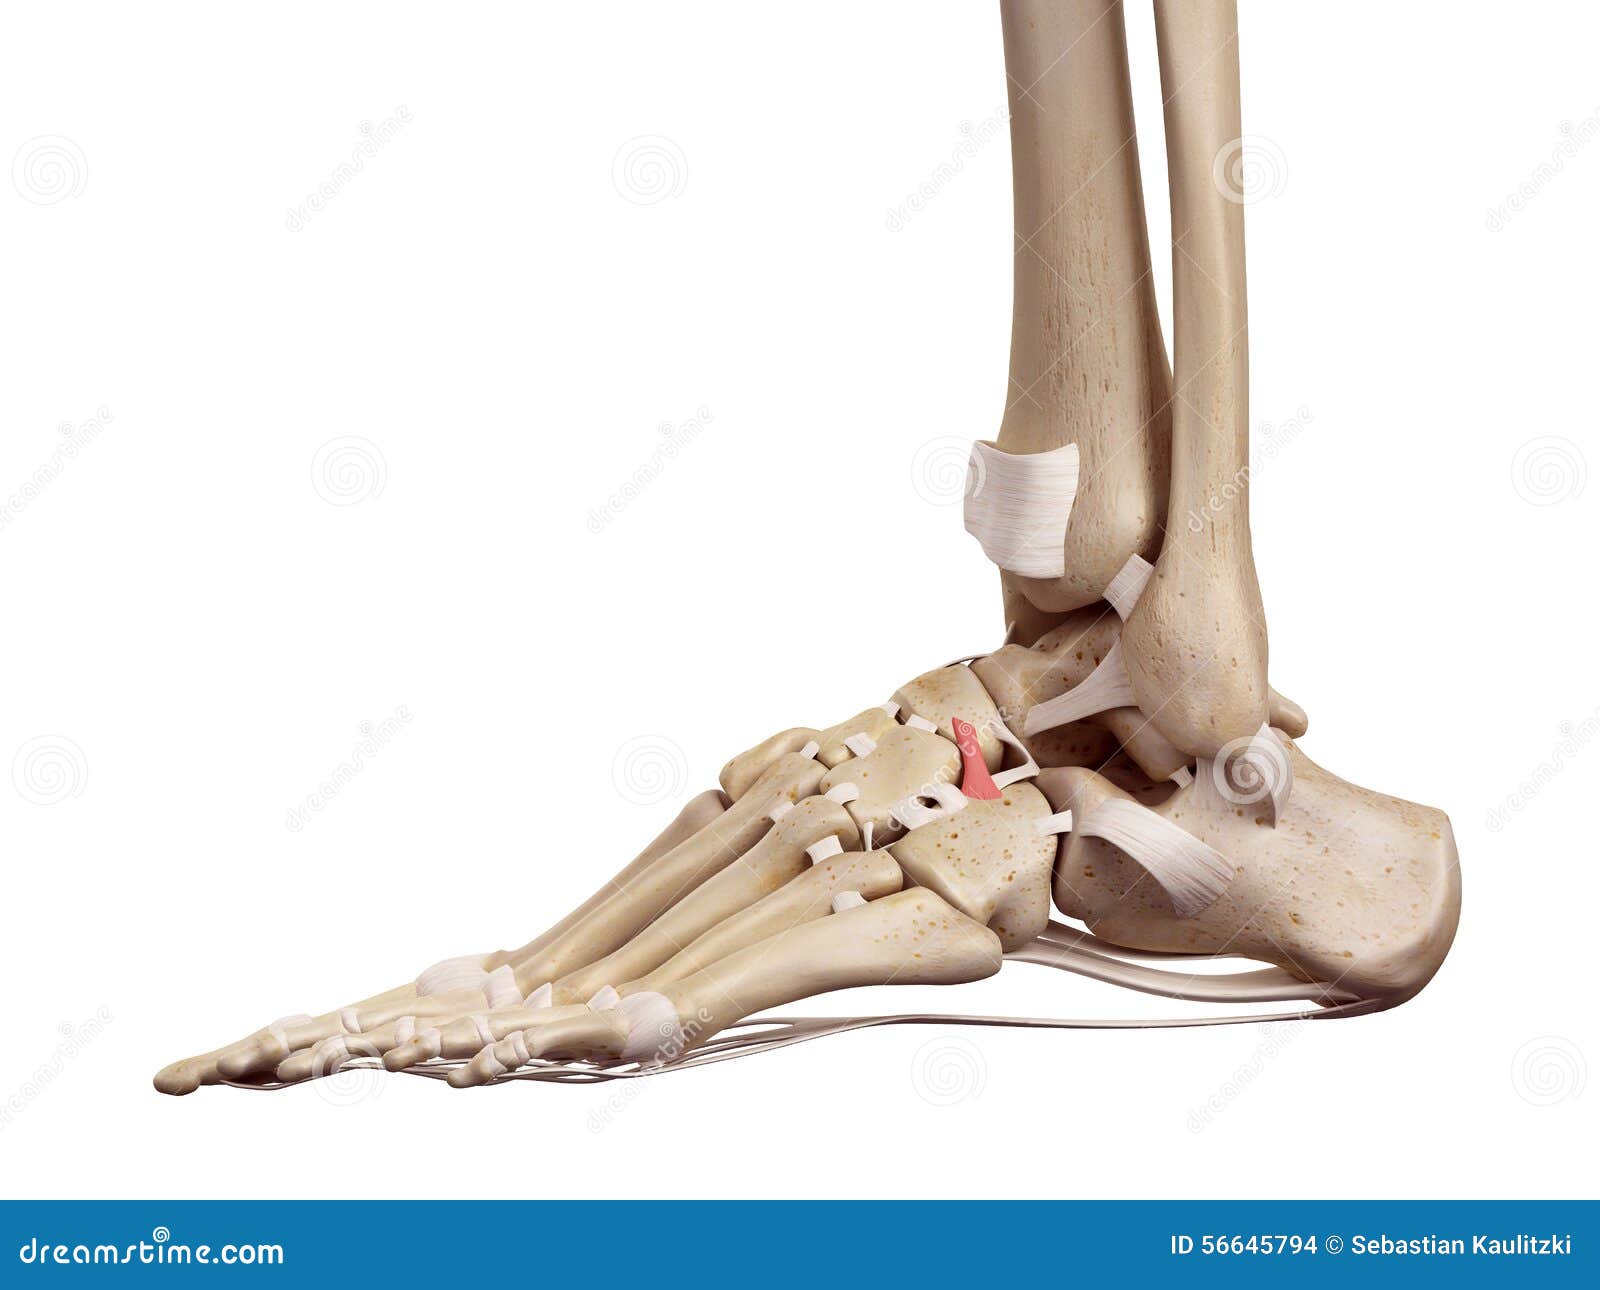 the dorsal cuboideonavicular ligament